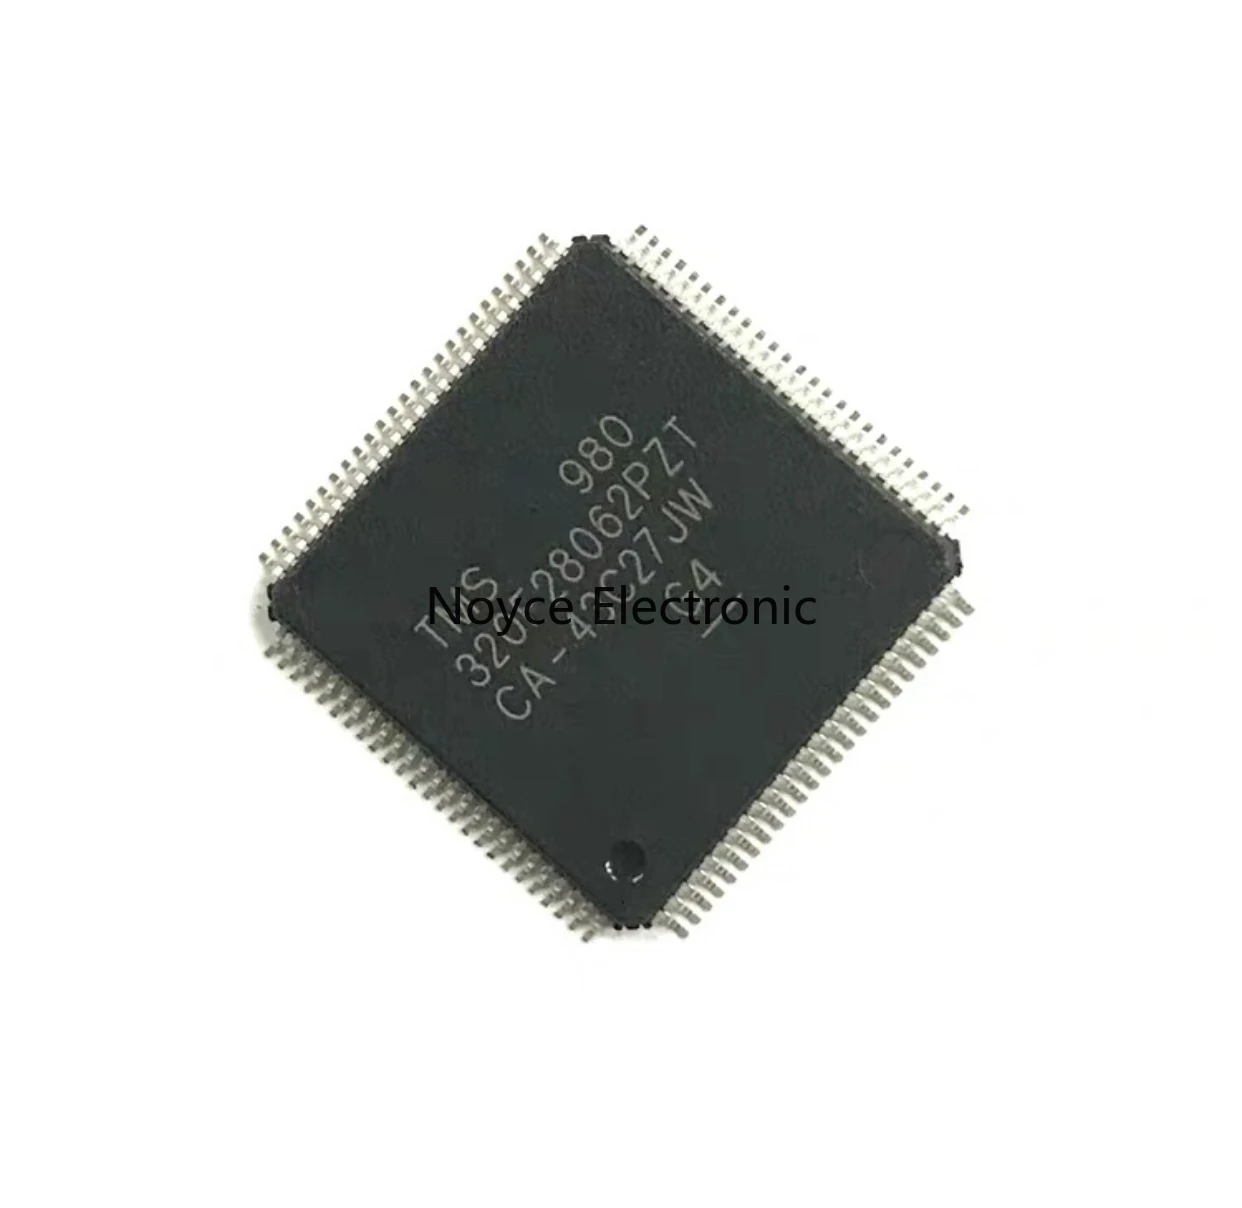 new original s mc9s08dz128mll cll vll lqfp100 mcu microcontroller 1pcs 1pcs/Free shipping new original spot TMS320F28062PZT LQFP100